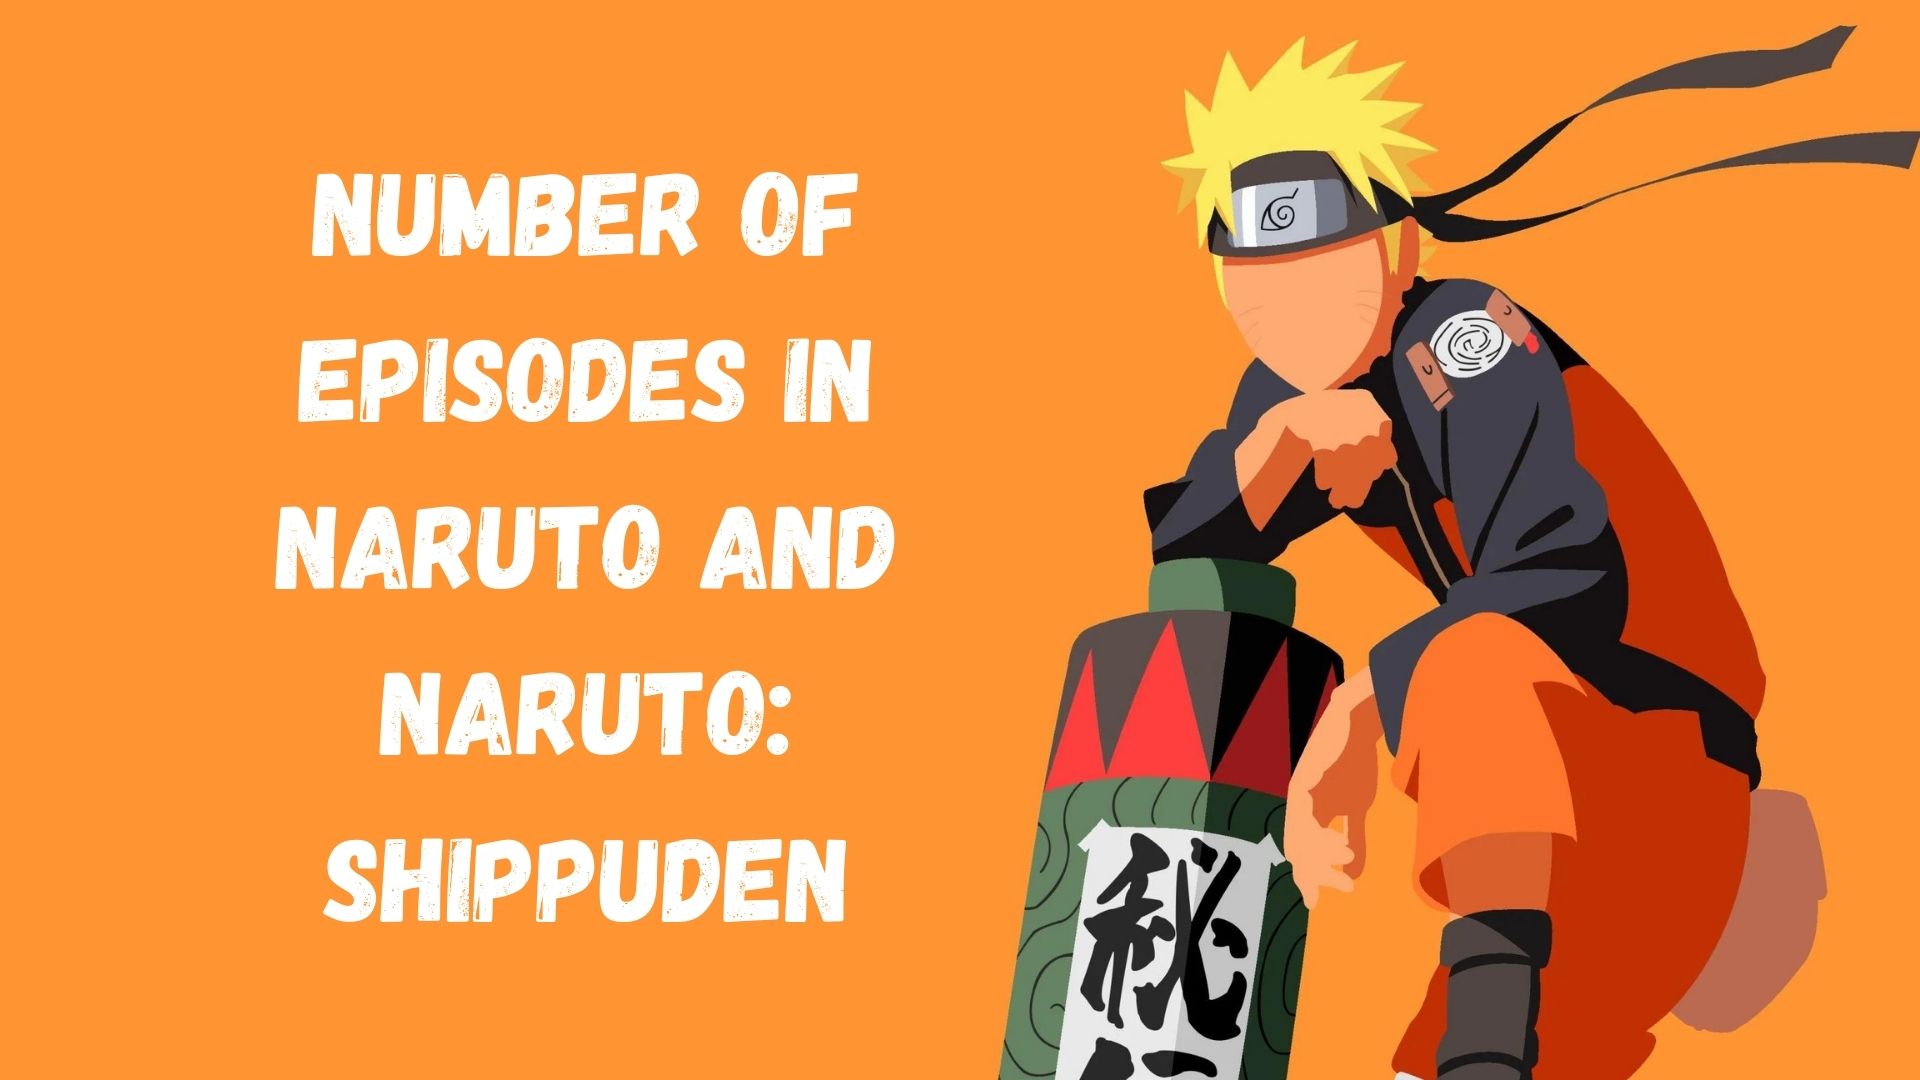 Episodes in Naruto and Naruto Shippuden